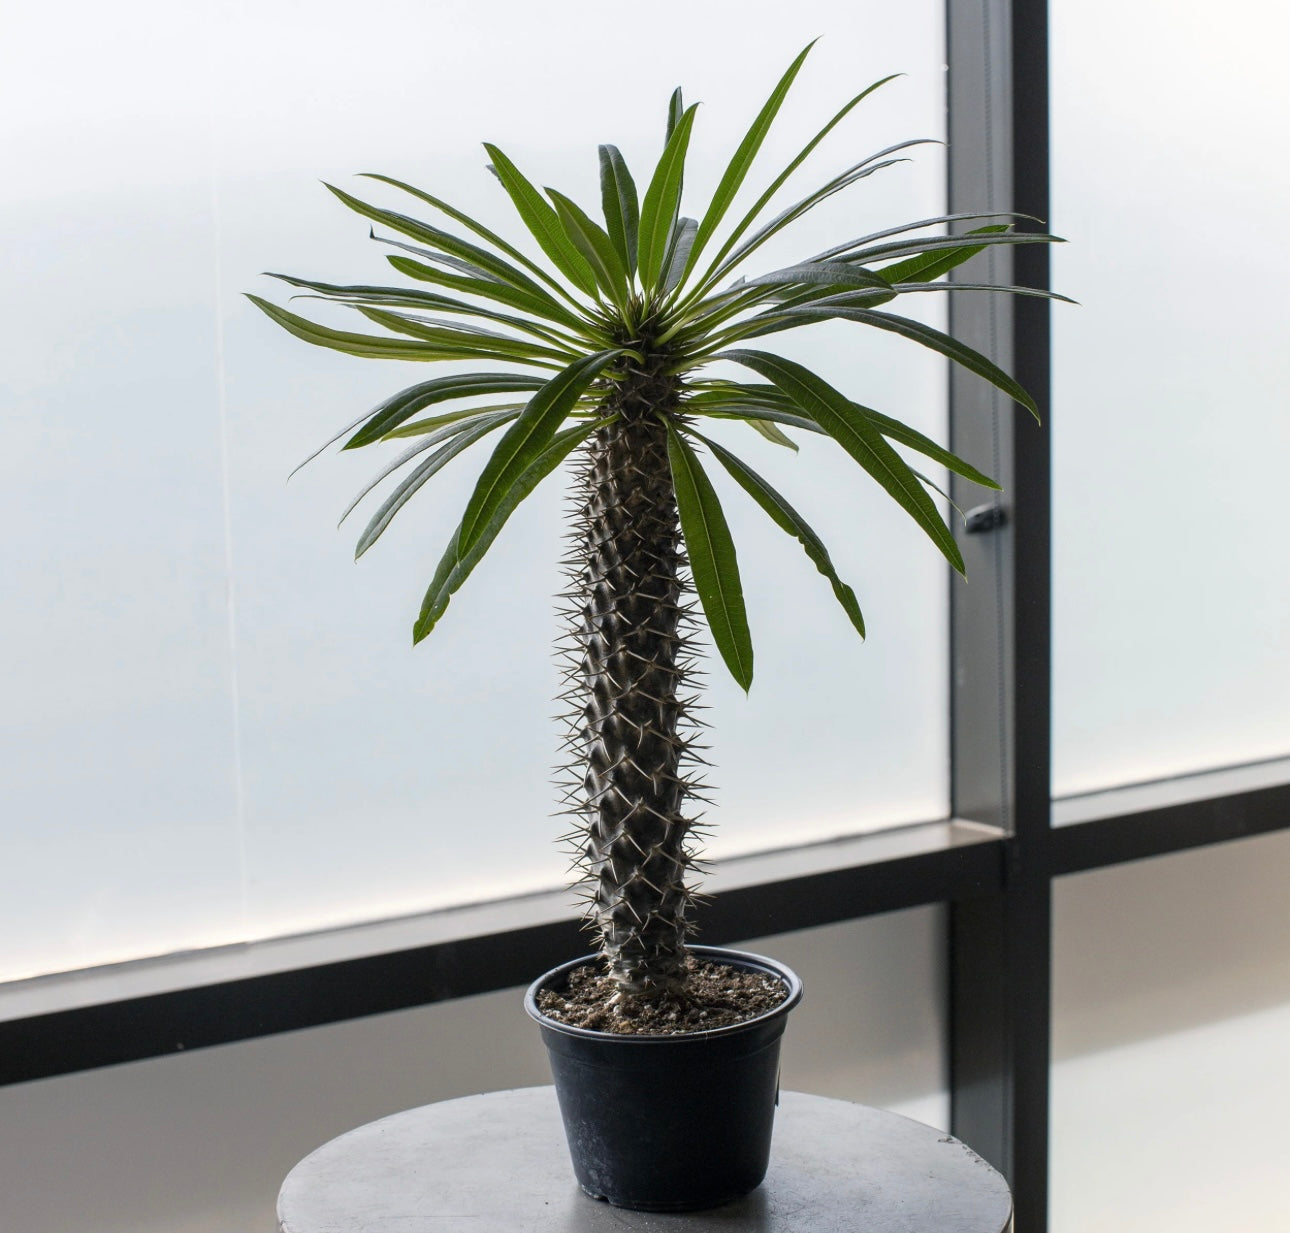 Pachypodium Lamerei ‘Madagascar Palm’ - Small - Plant Studio LLC